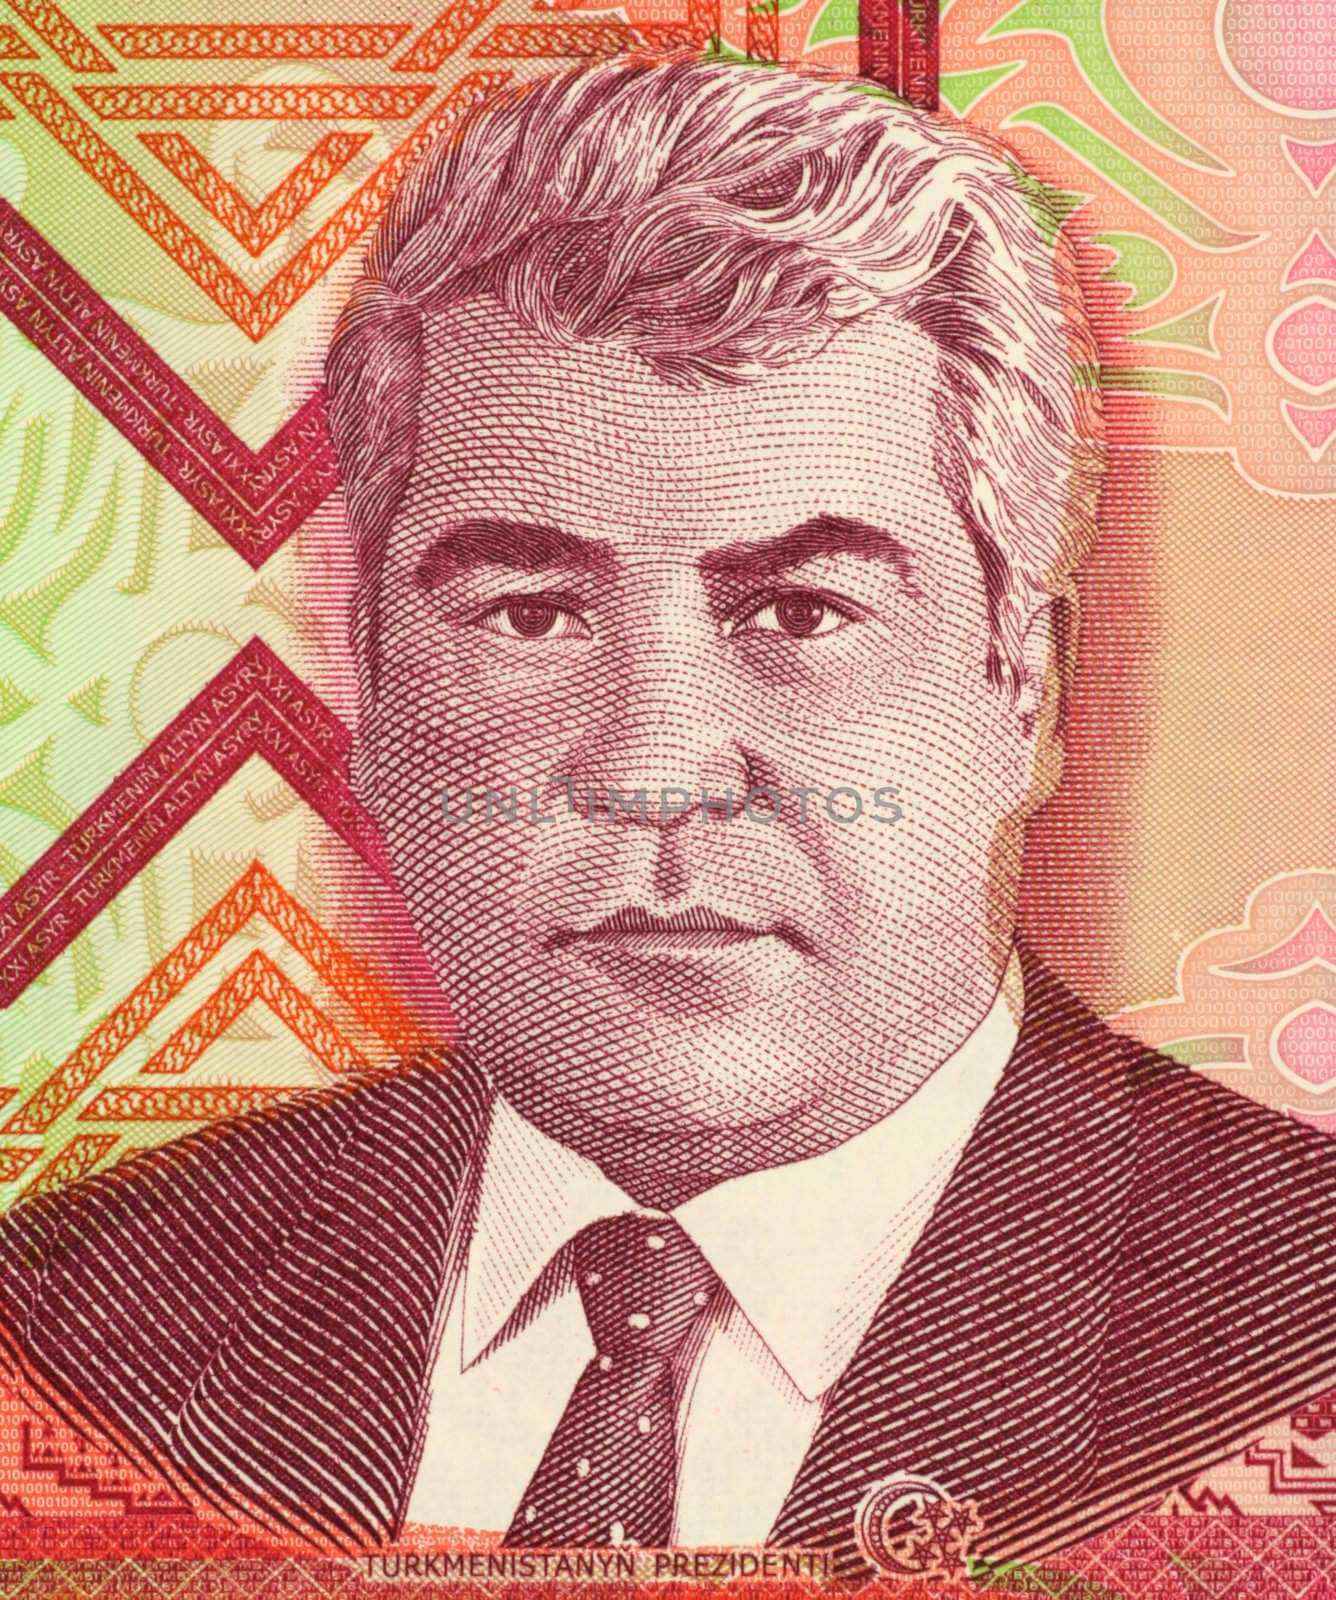 Saparmurat Niyazov on 1000 Manat 2005 Banknote from Turkmenistan. President of Turkmenistan during 1990-2006.